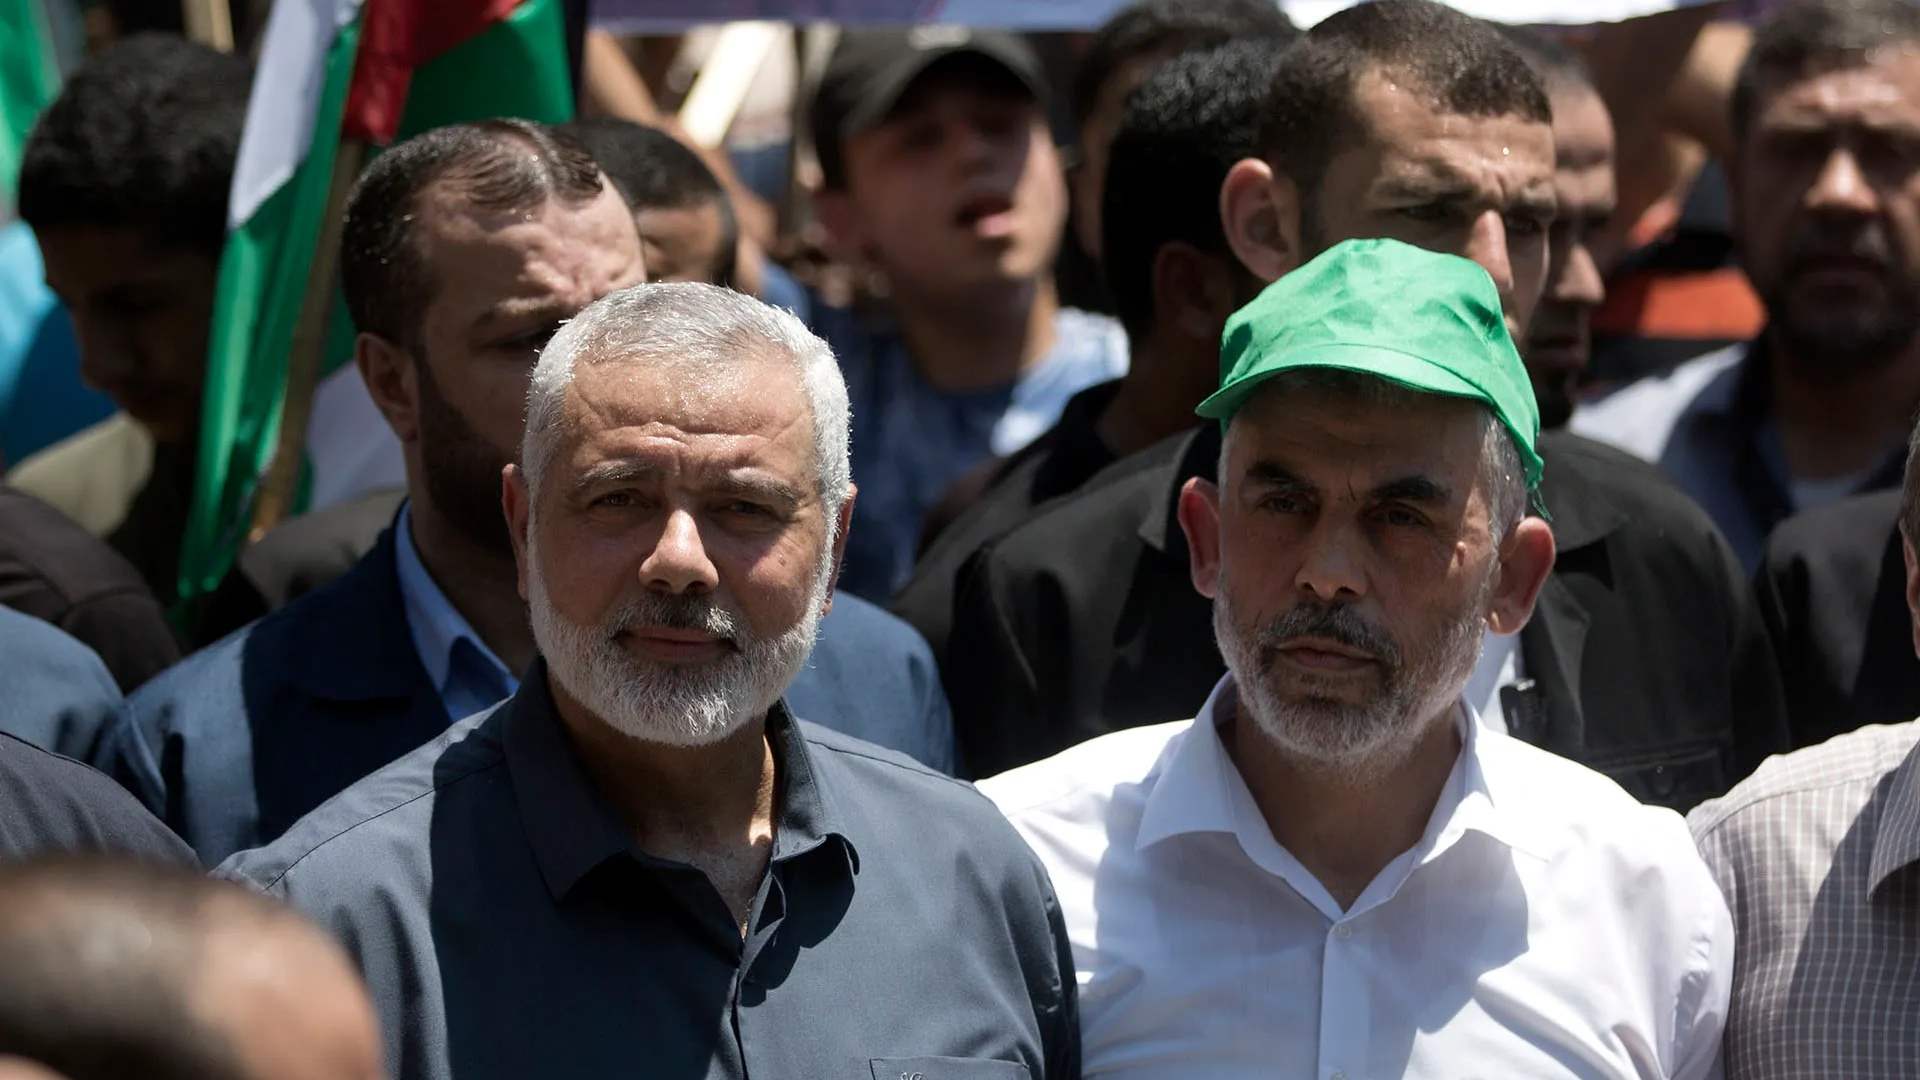 Hamas announces Yahya Sinwar as new political bureau chief, succeeding Haniyeh